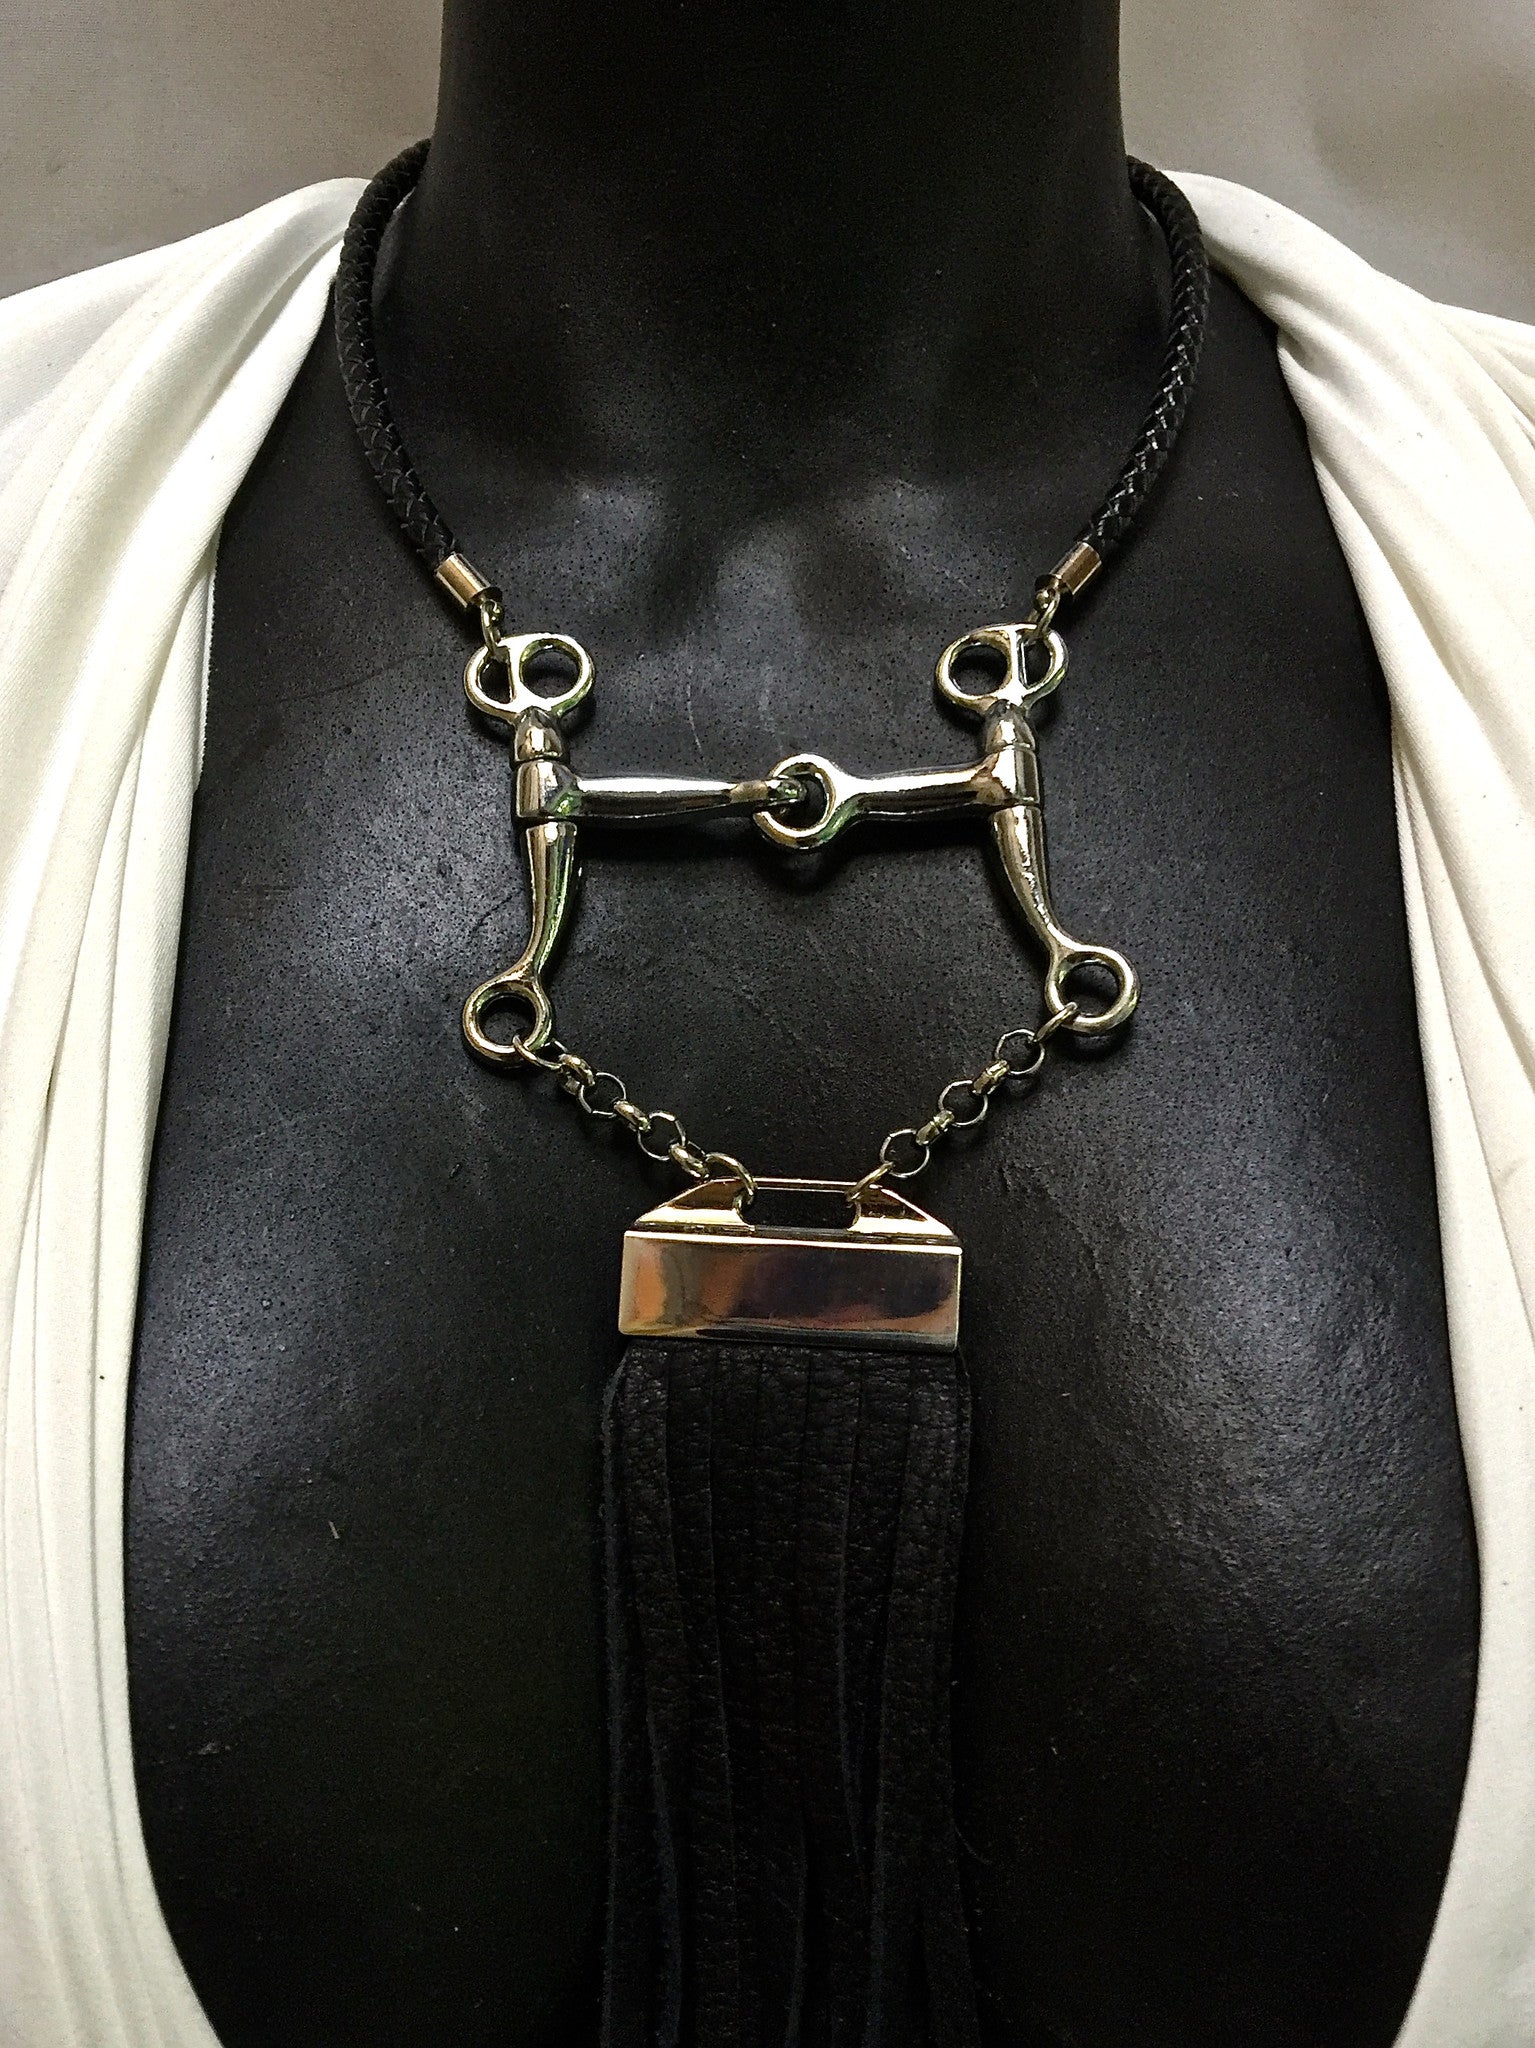 Pelham horse bit pendant choker necklace with long deerskin tassel